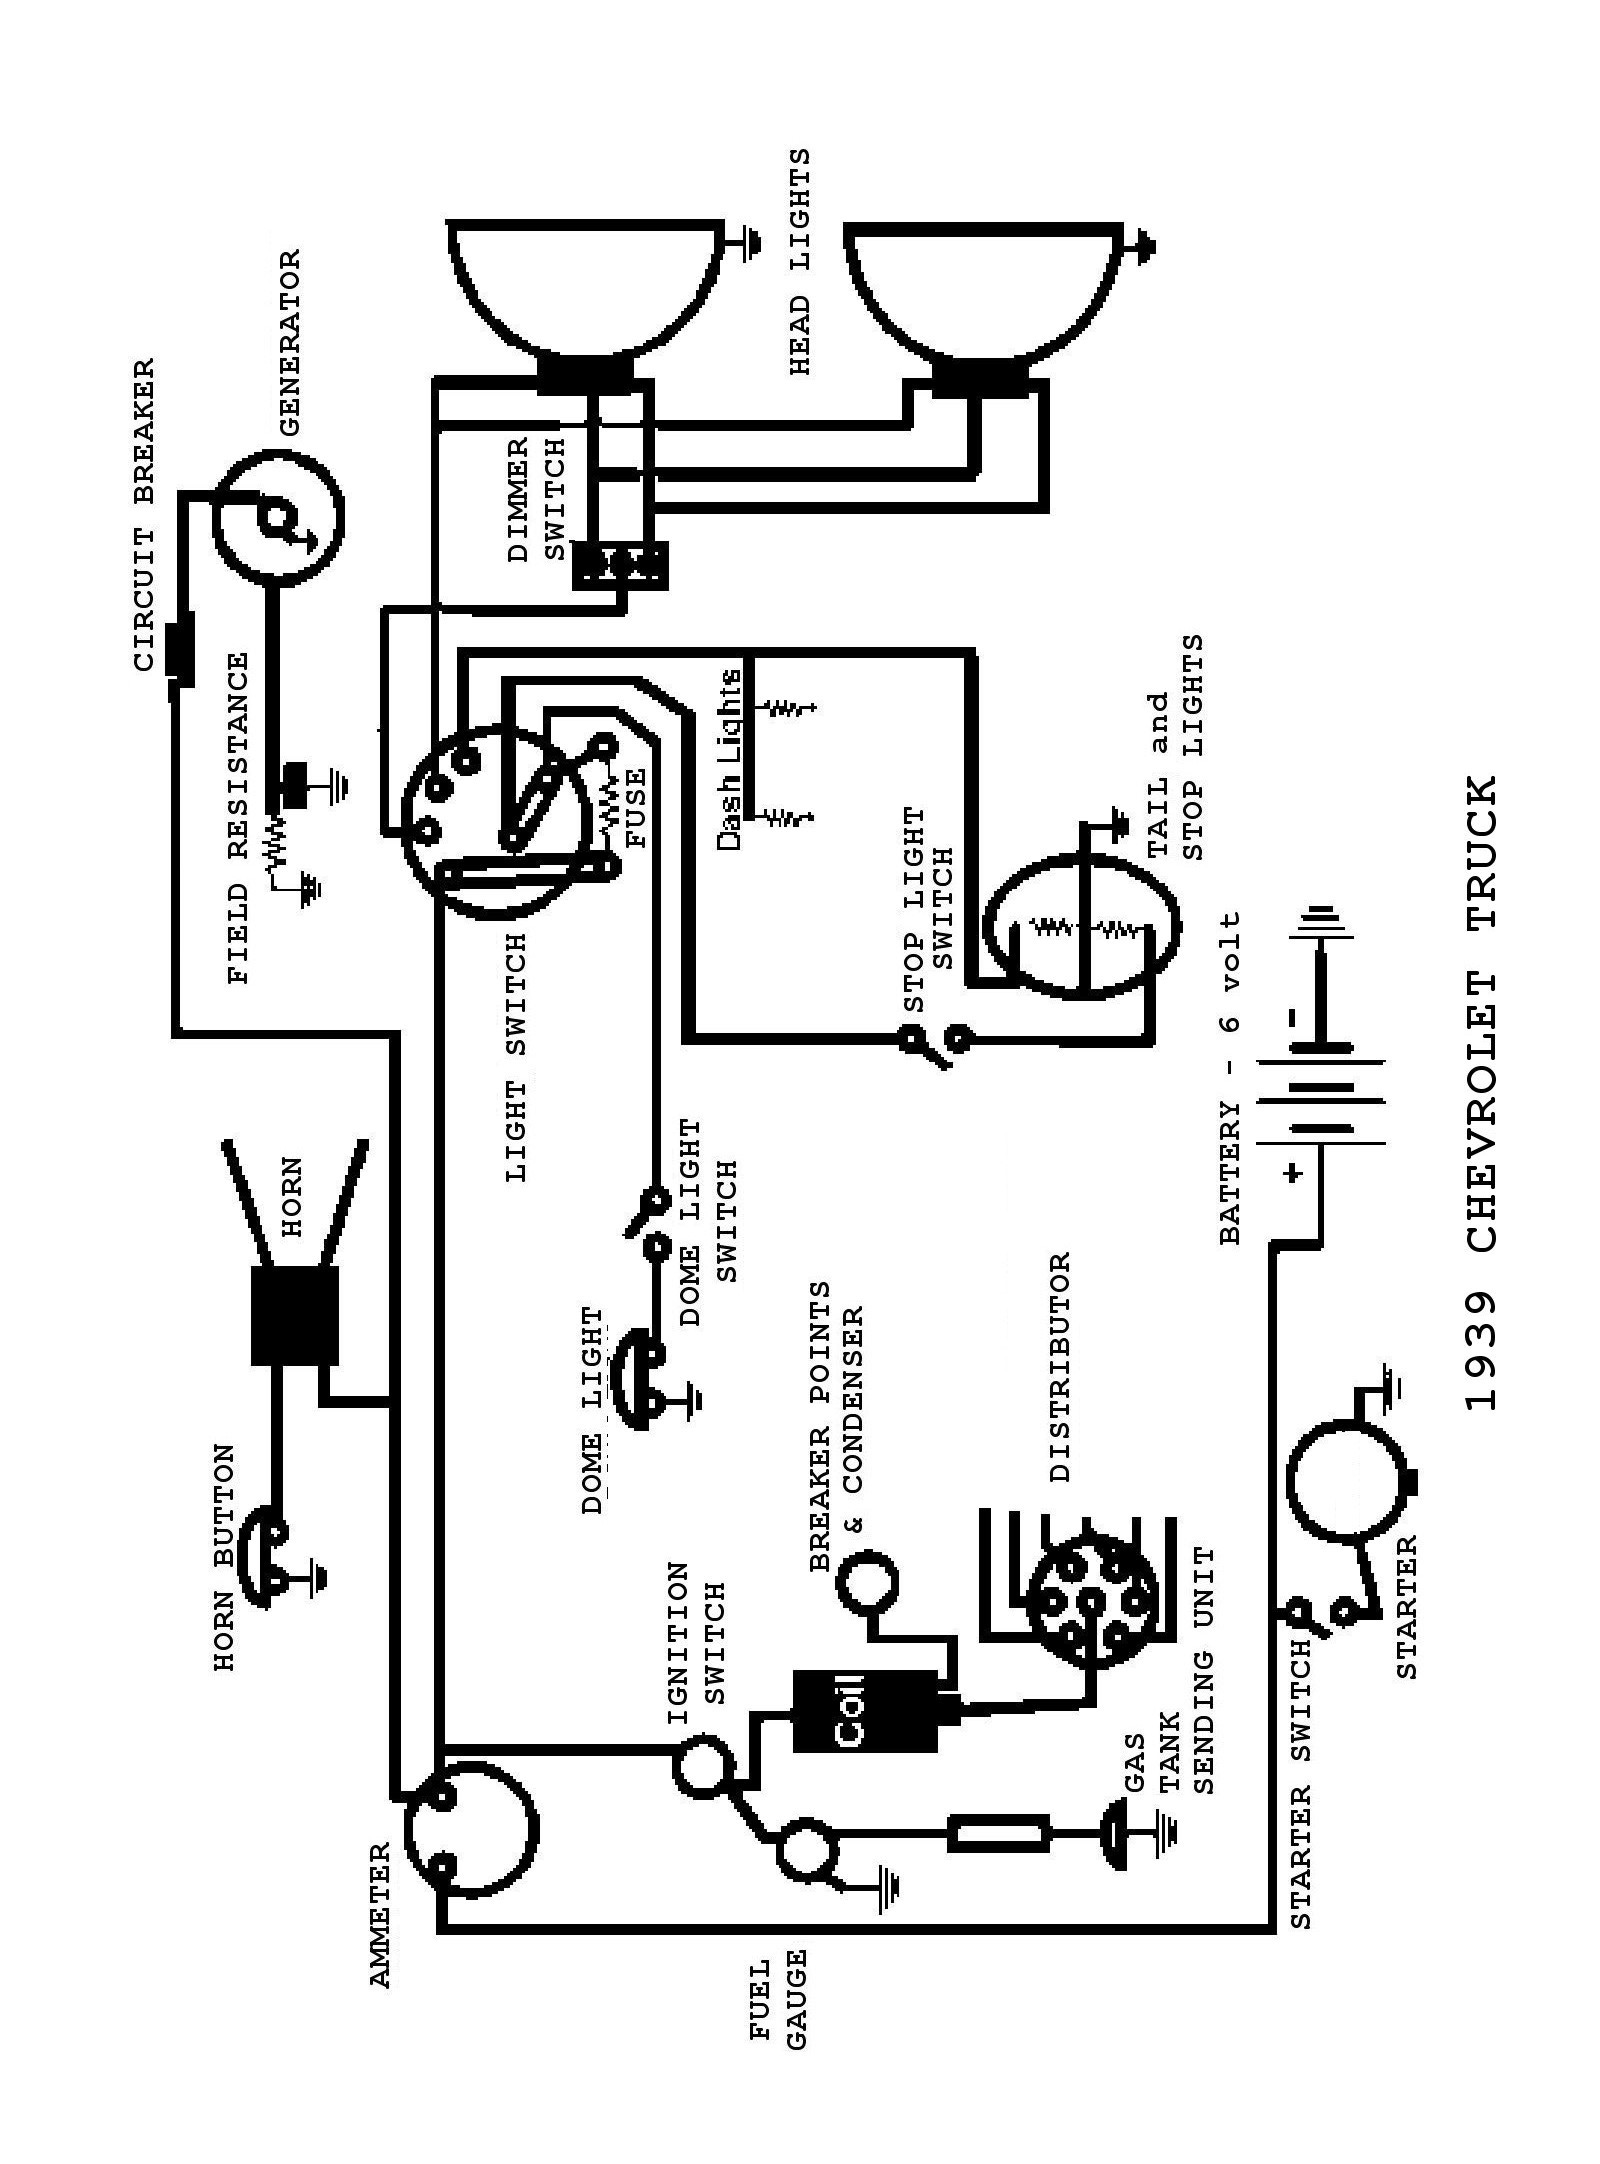 International Truck Wiring Diagram Chevy Wiring Diagrams Of International Truck Wiring Diagram